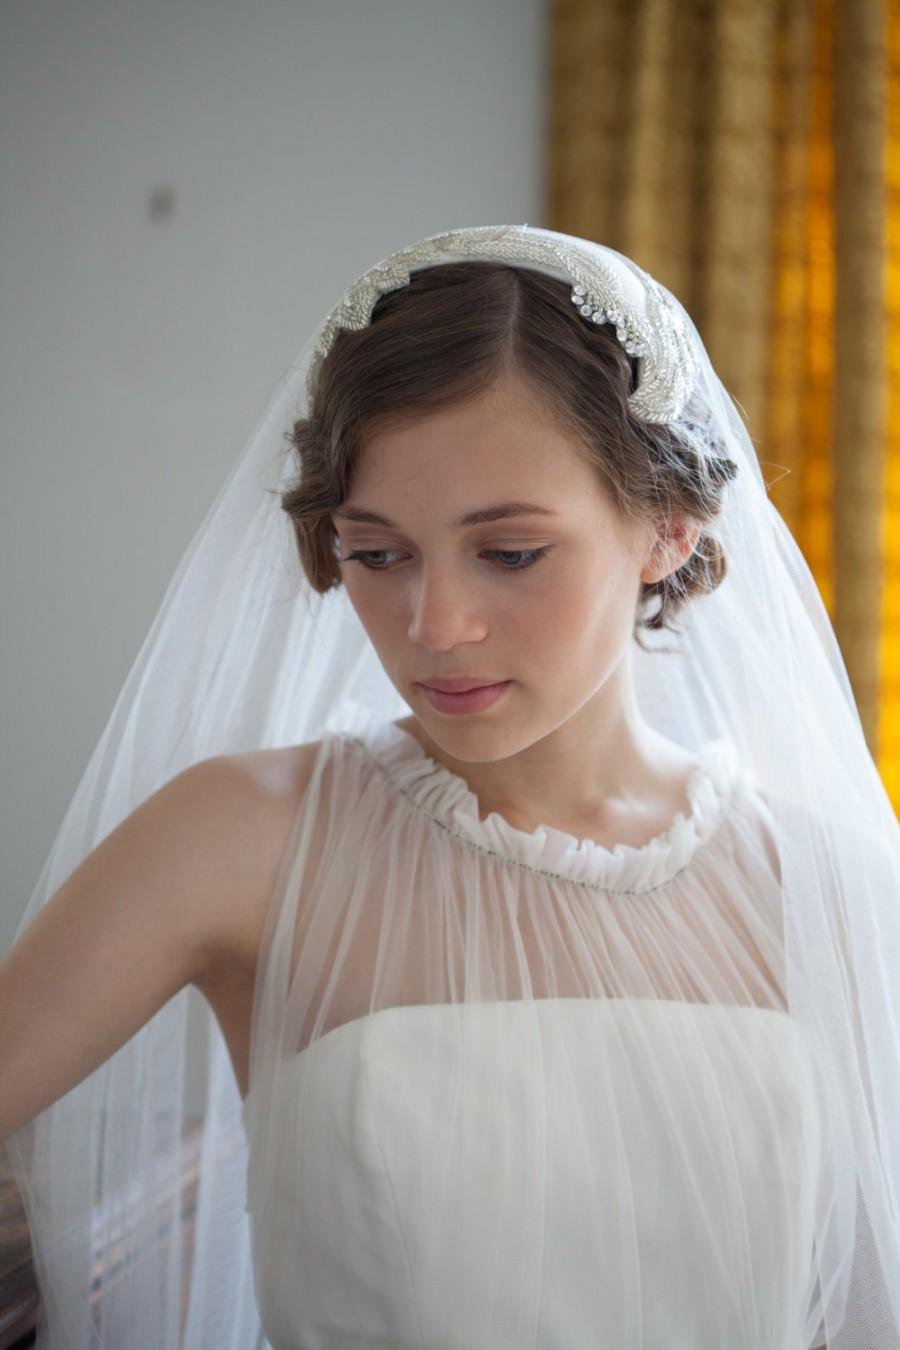 Wedding - Wedding Headpiece and veil - Vintage style Bridal headpiece and drop veil set -1940s Wedding Dress -1930s Wedding Dress -Fingertip length